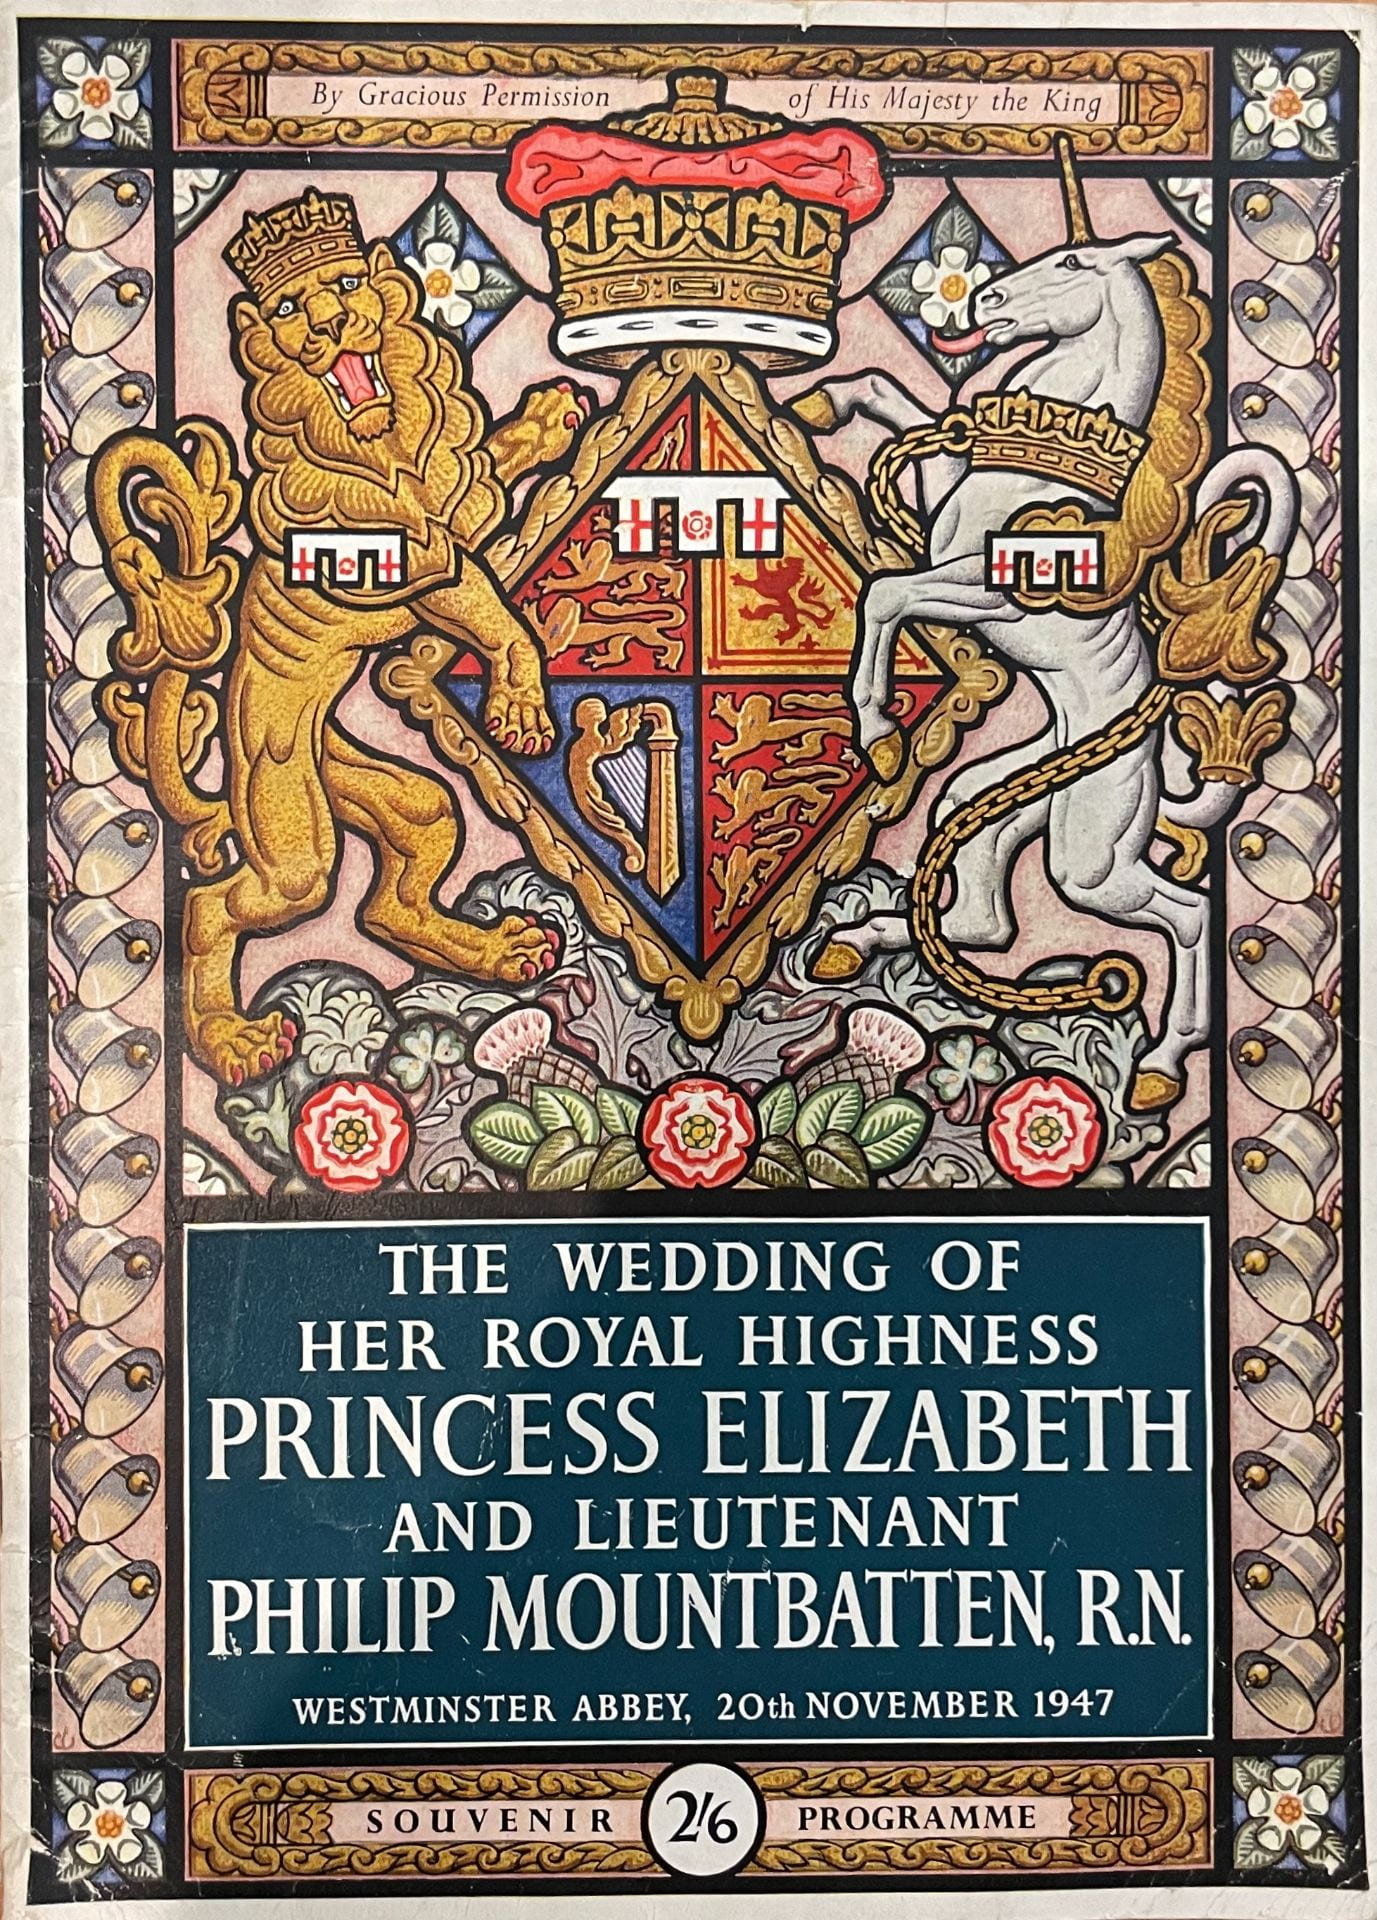 Souvenir pamphlet from British royal wedding 1947